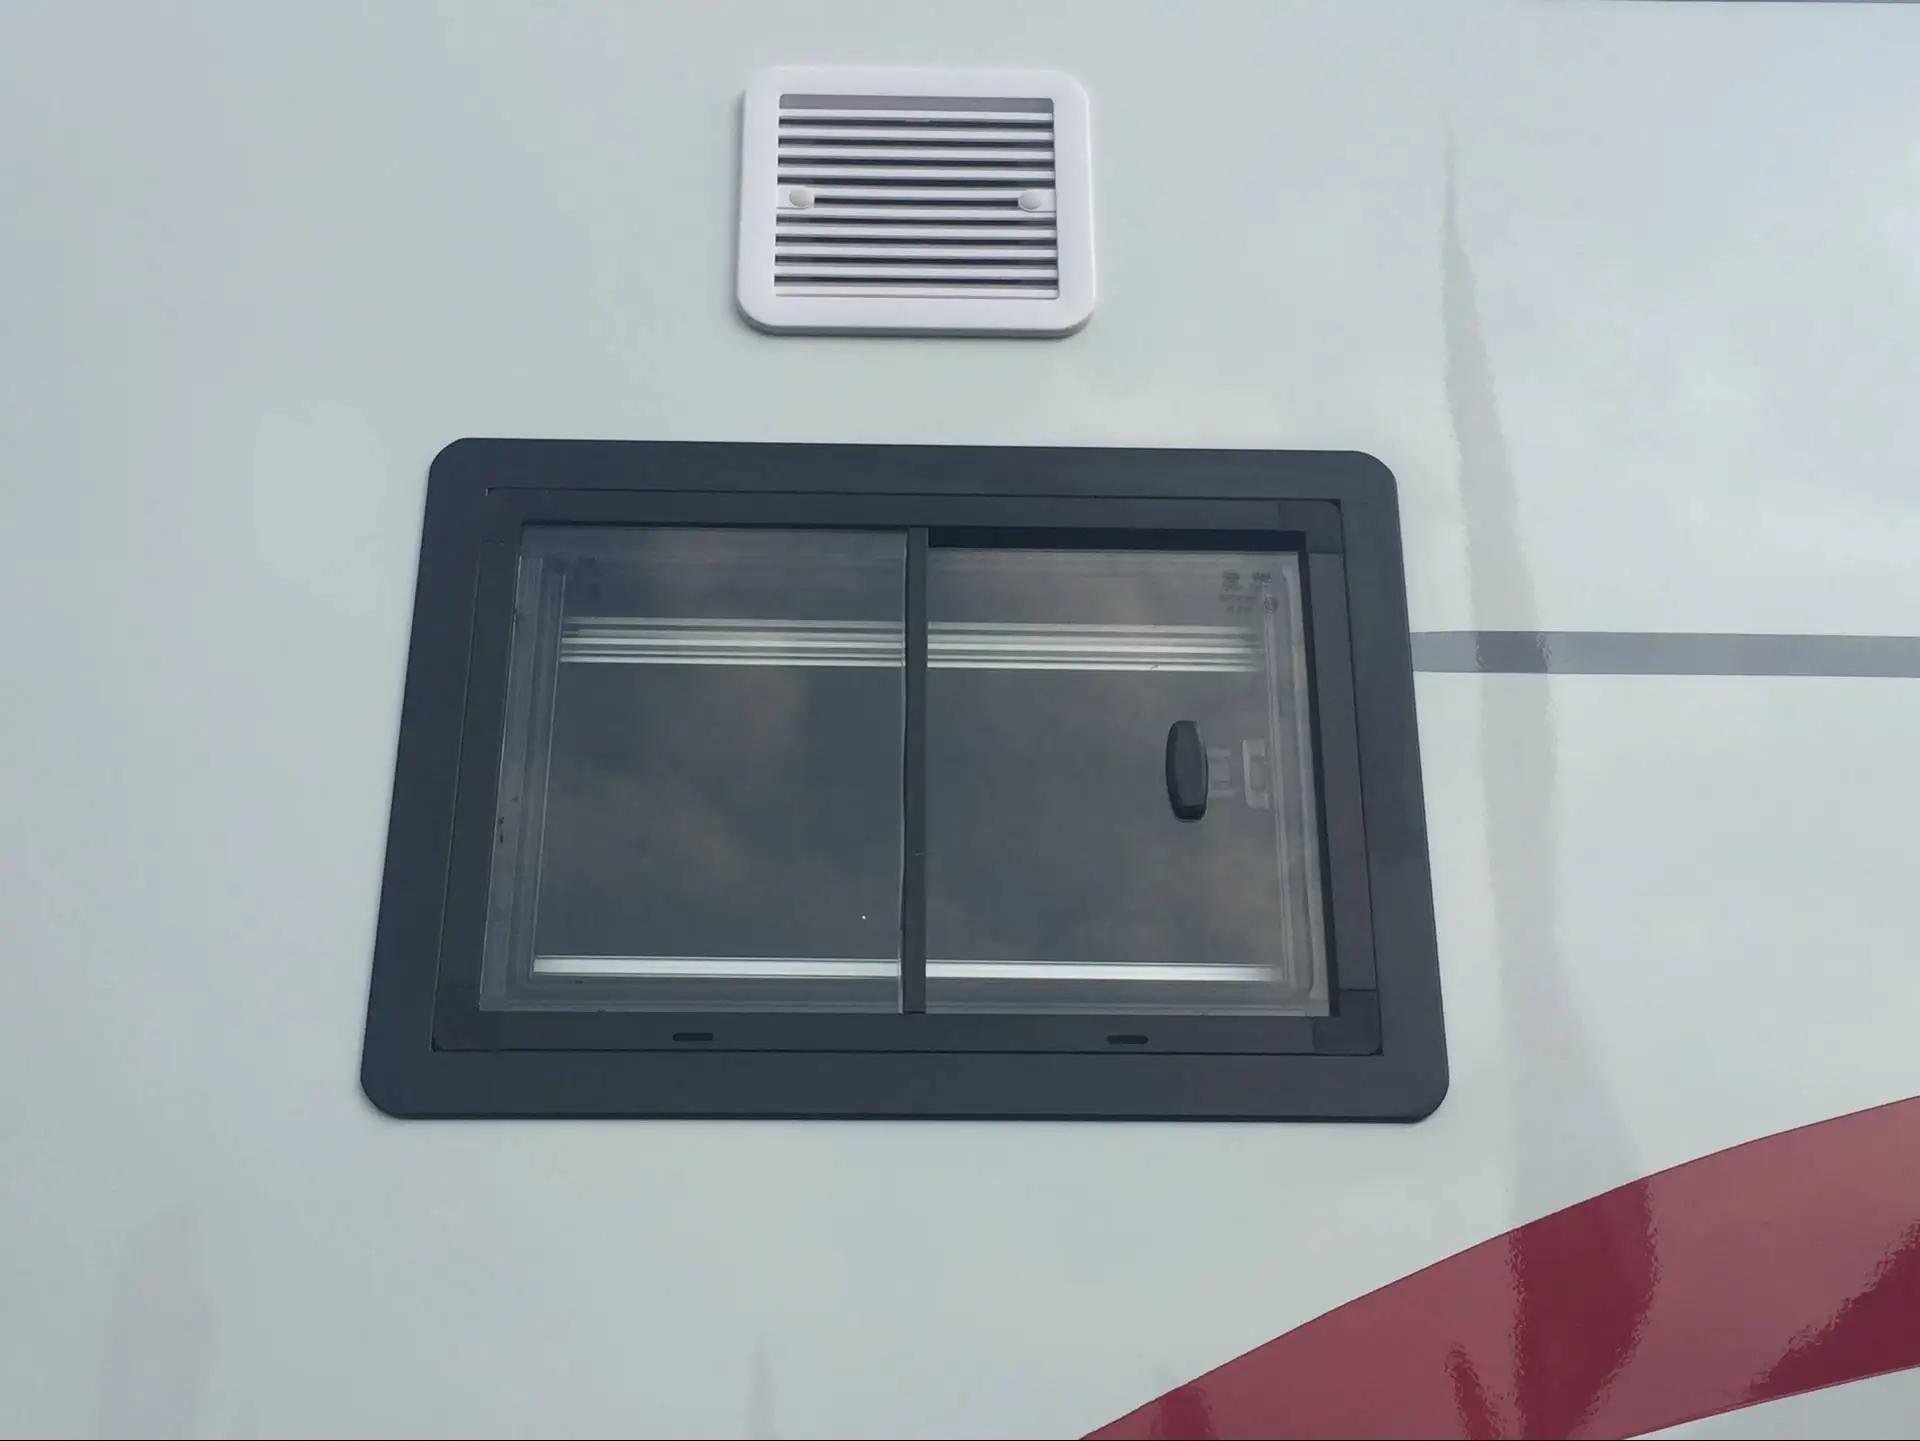 

1200x350mm 47.2x13.8 Inch RV Caravan Motorhome Sliding Window Hatch With Tempered Glass MG15RW-SL